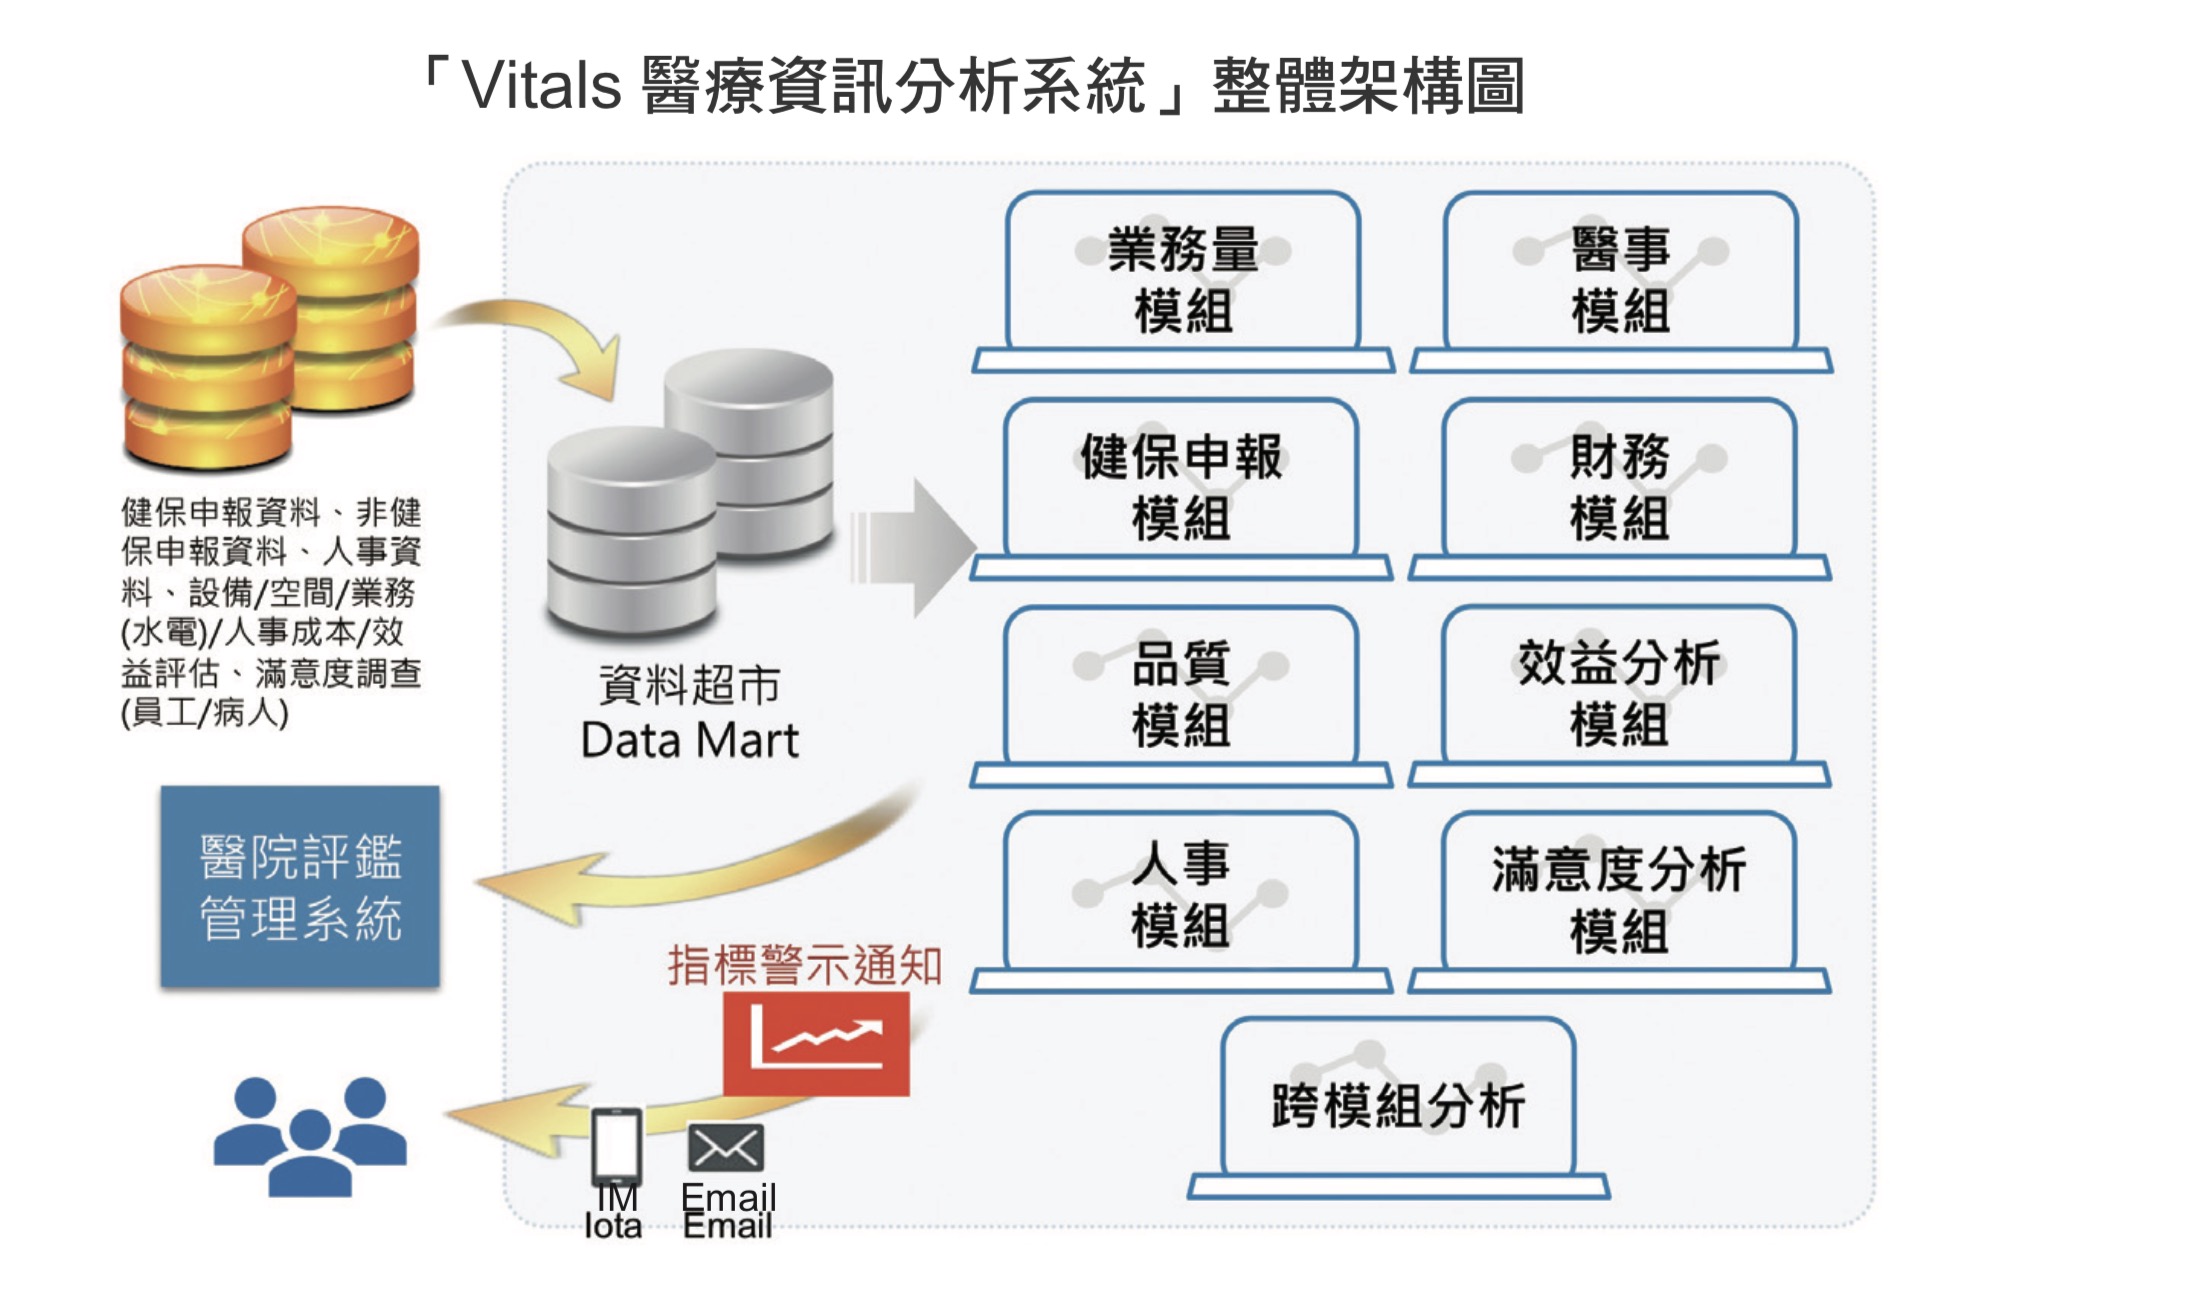 「Vitals 醫療資訊分析系統」整體架構圖